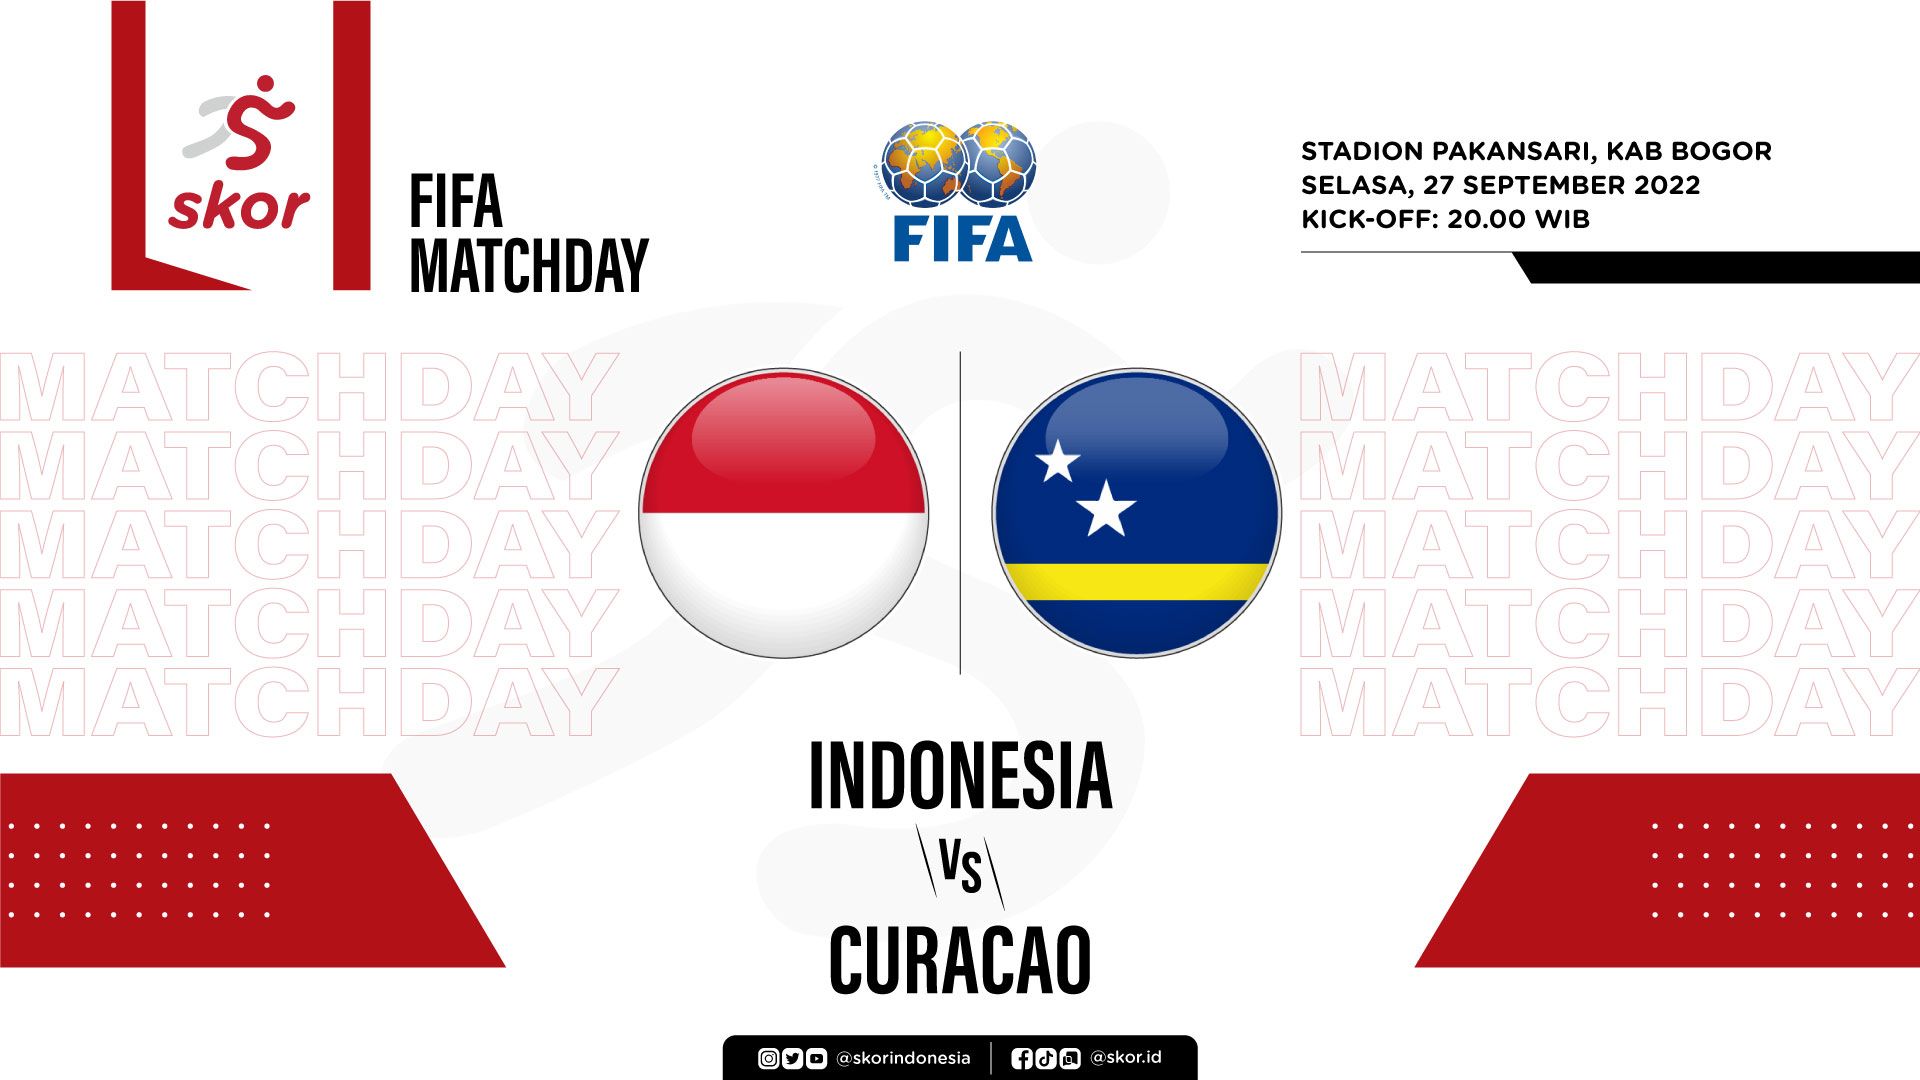 FIFA Matchday,  Indonesia vs Curacao